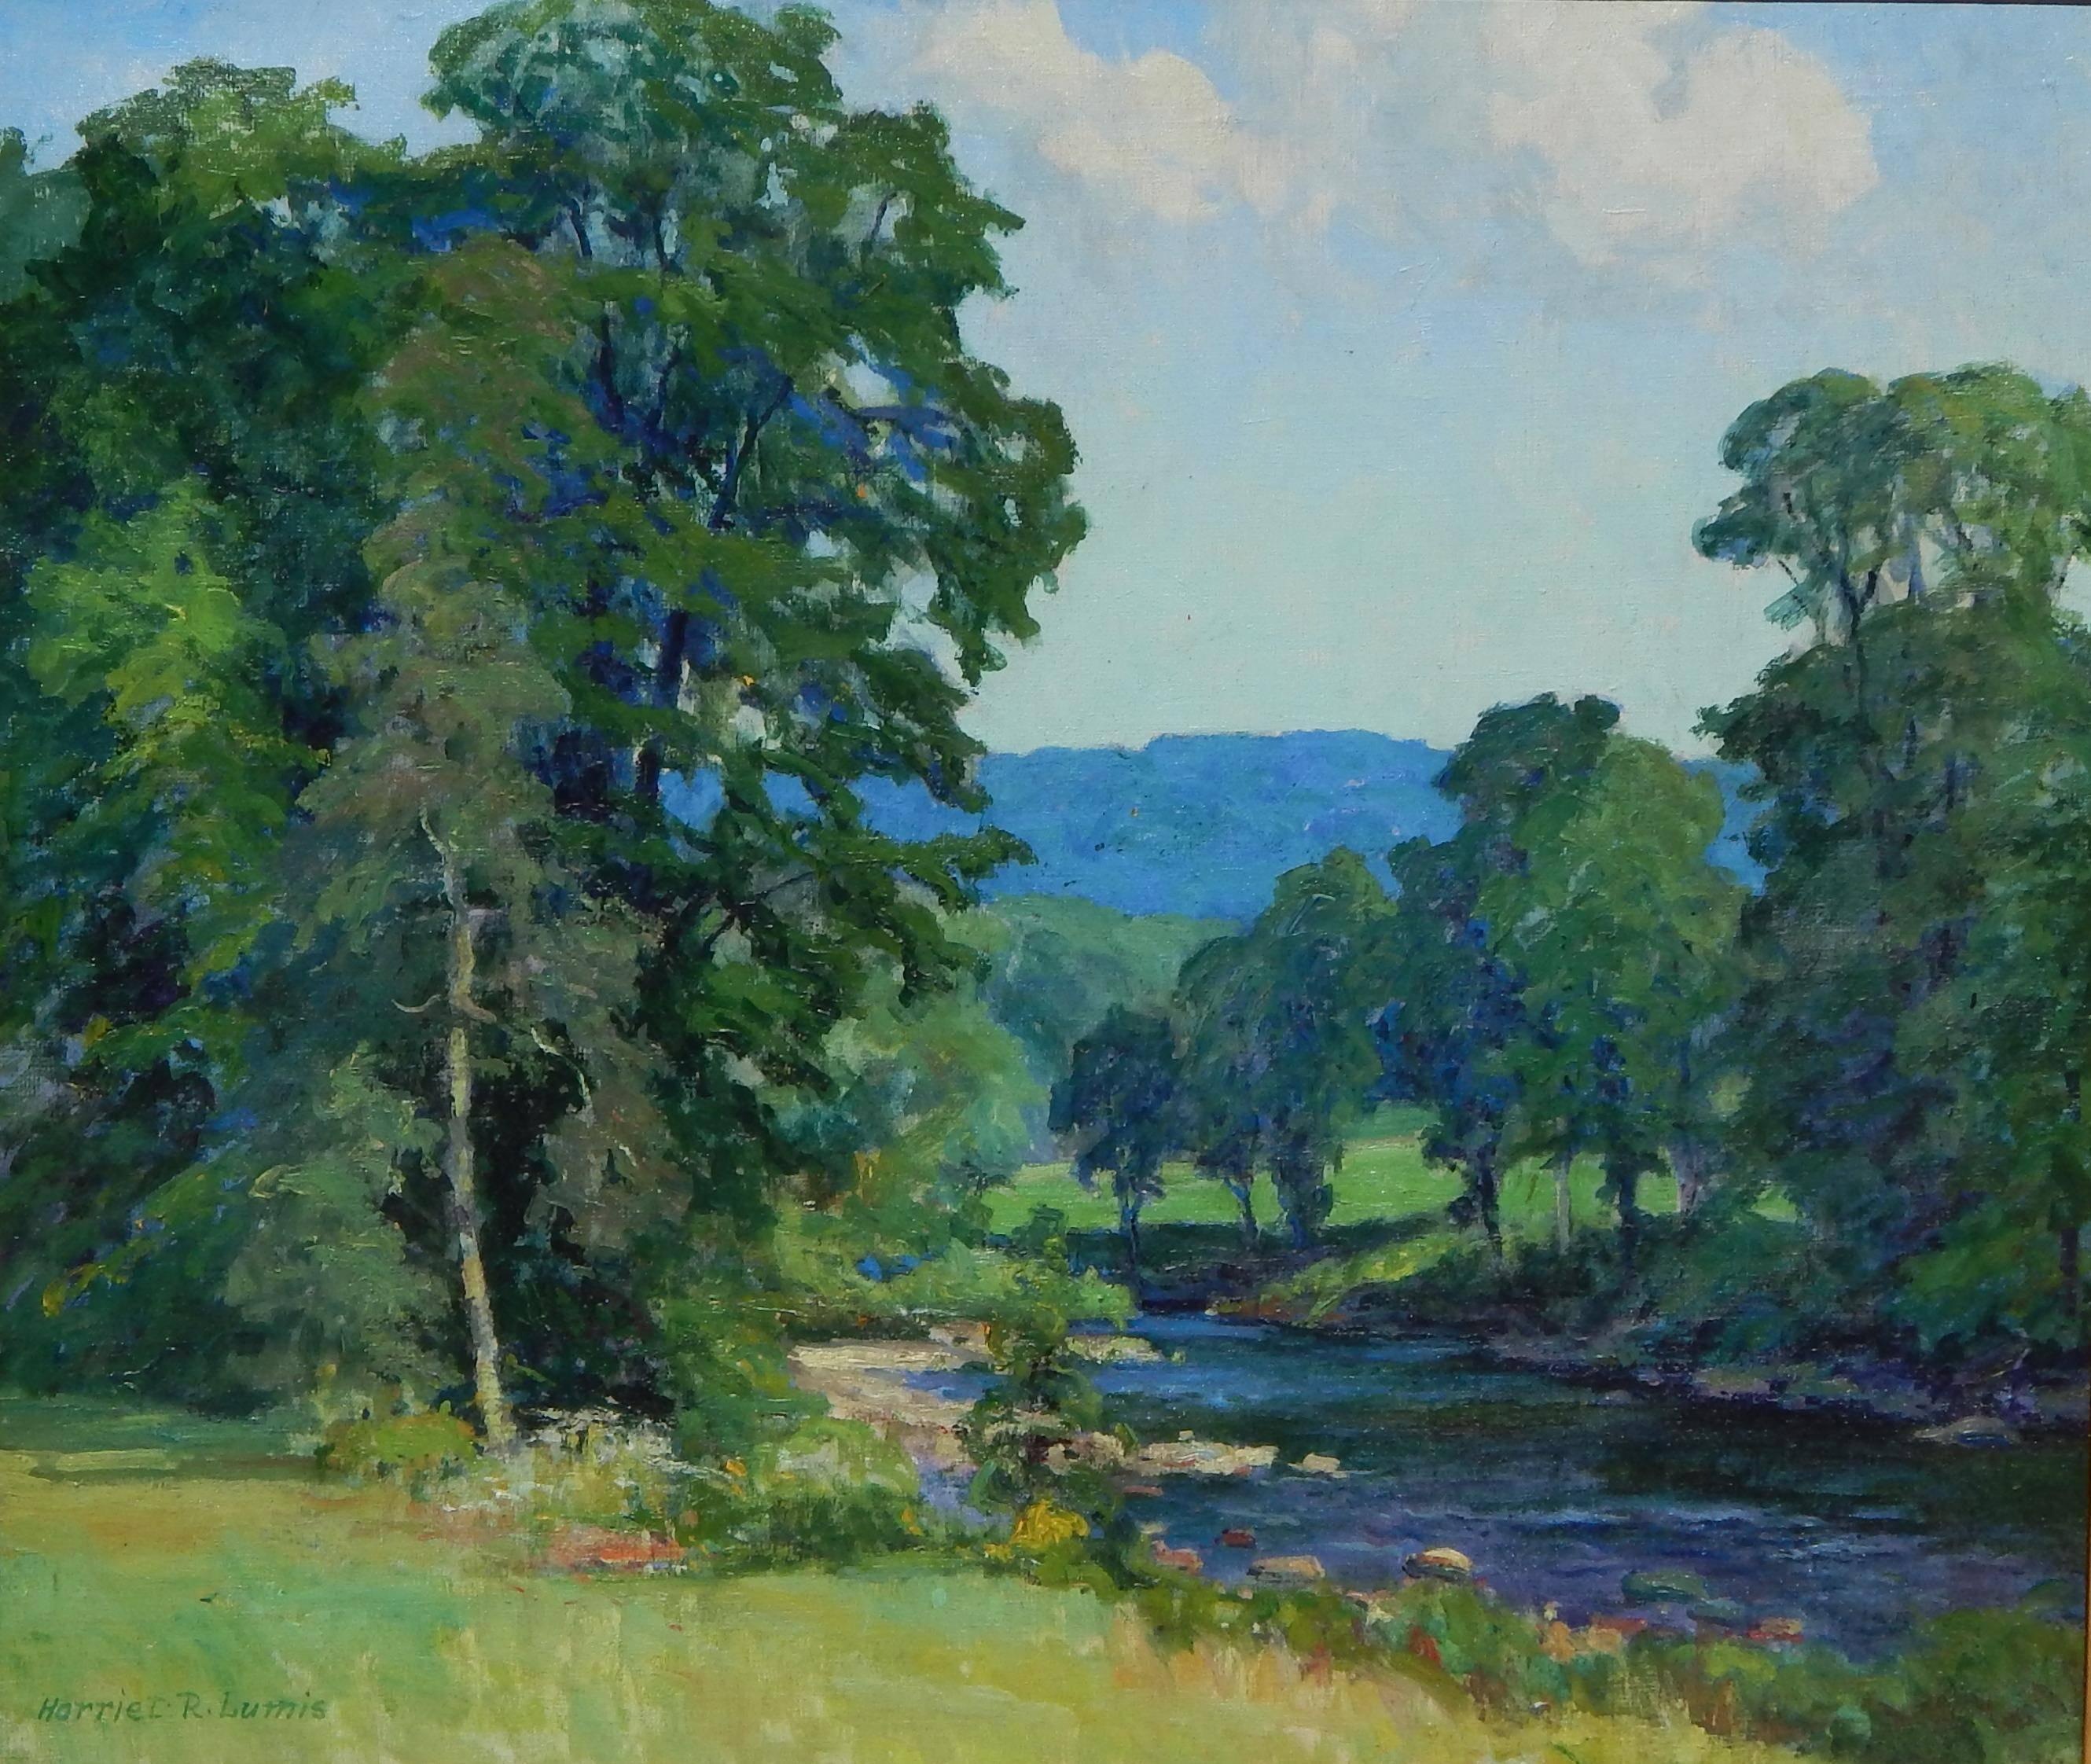 Harriet Lumis (1870-1953) “River at Cummington” (Massachusetts)
Oil on canvas signed lower left.
Measures: 24